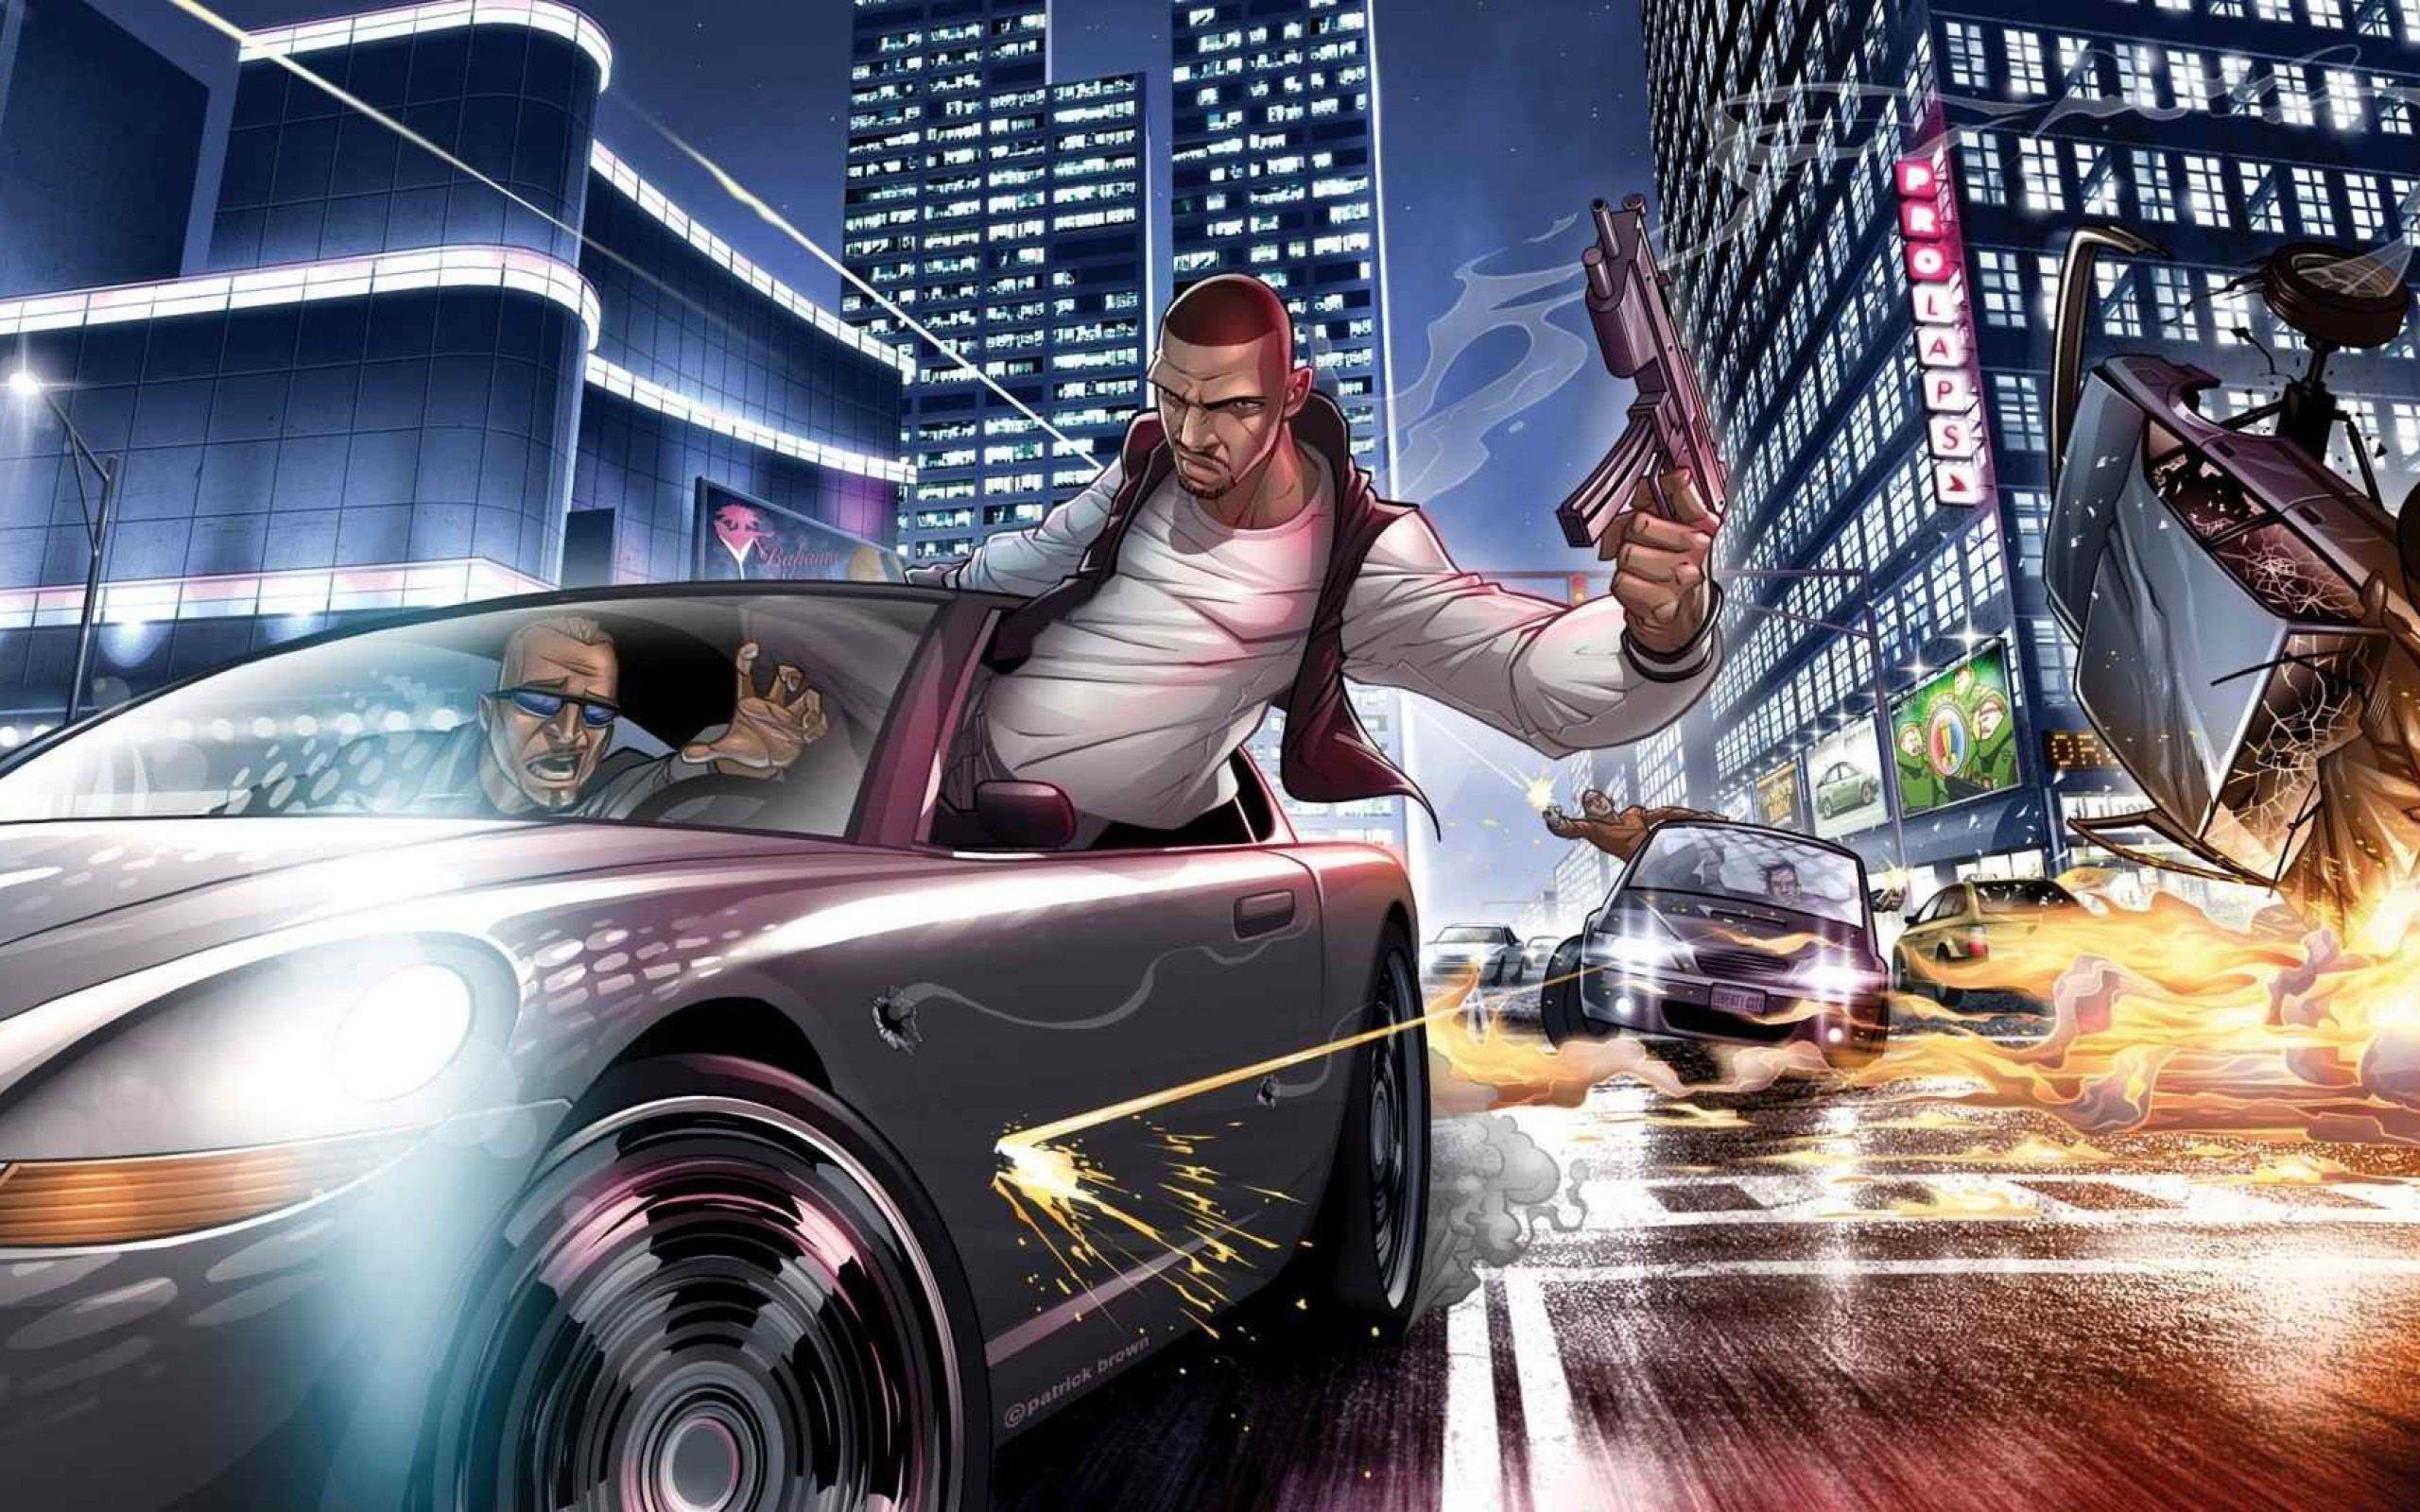 2560x1600 Grand Theft Auto V HD Wallpaper Download High Quality